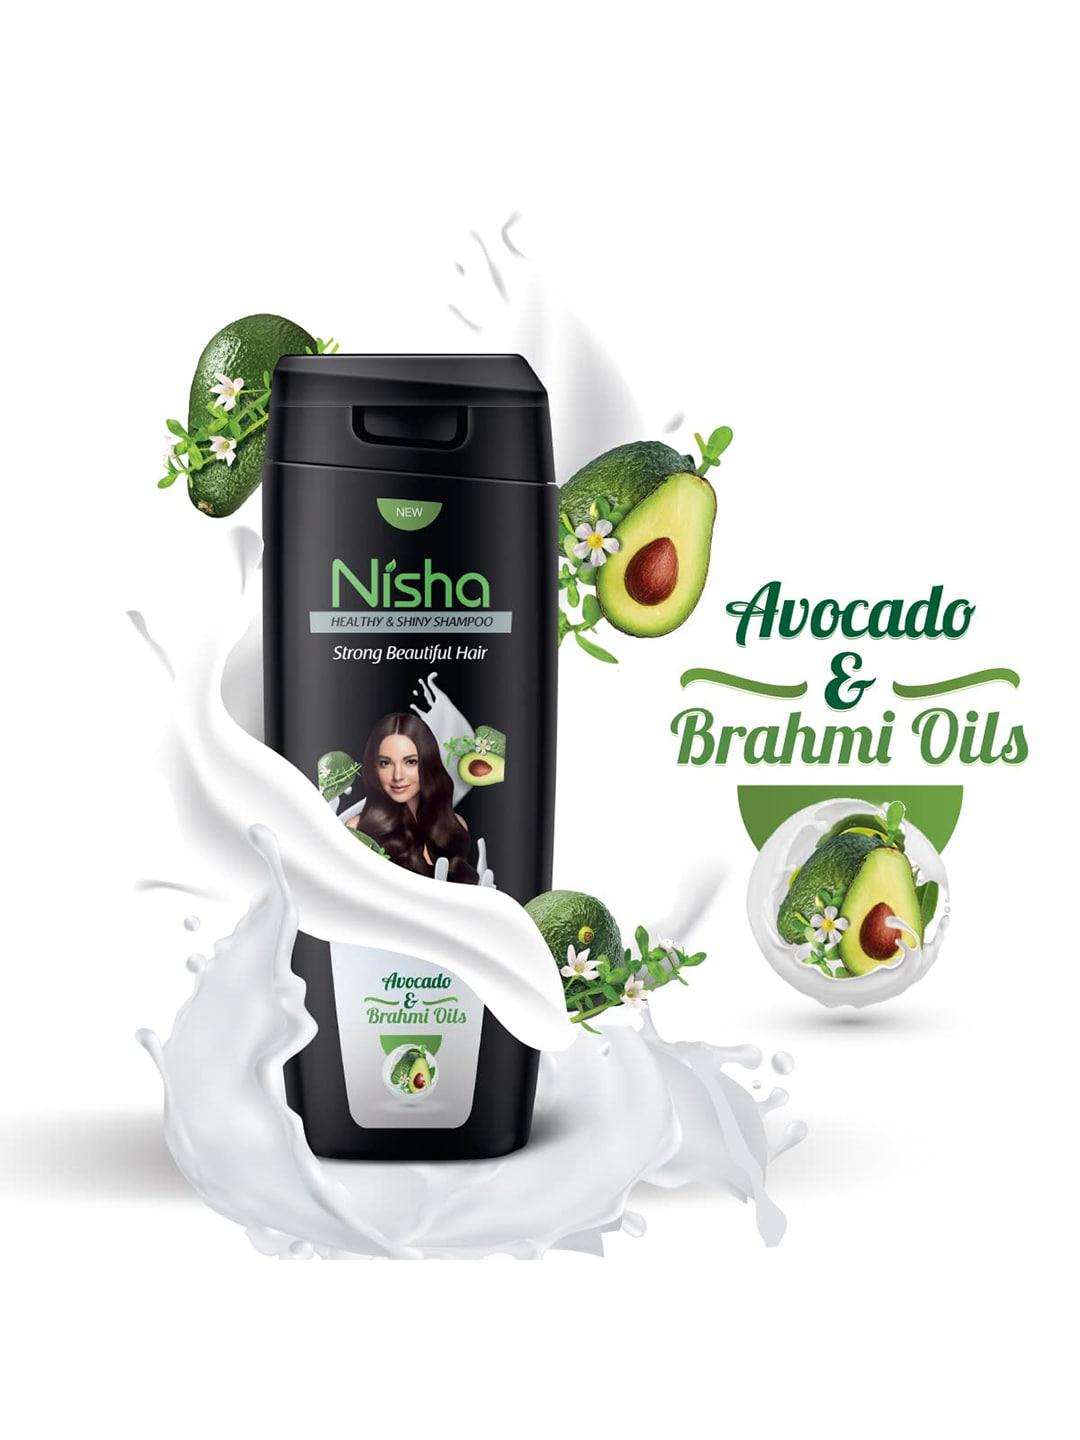 nisha set of 2 healthy & shiny beautiful hair shampoo with avocada & brahmi oils 180 ml